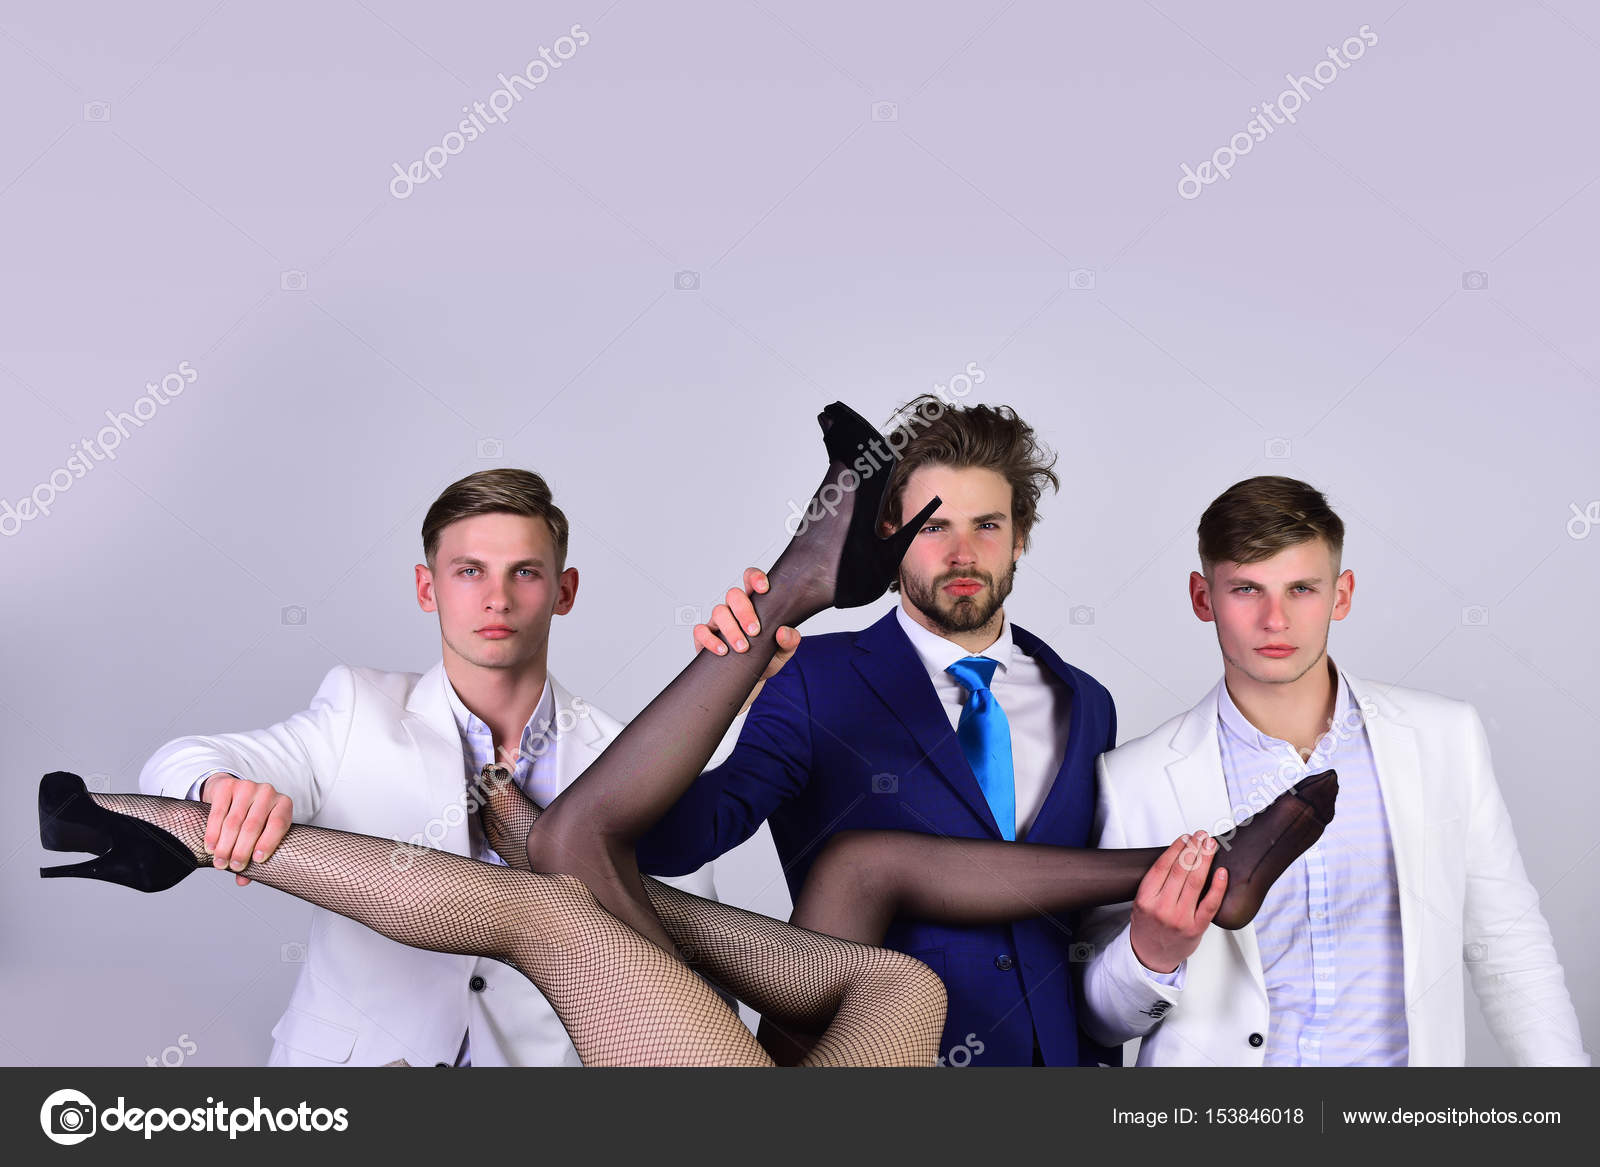 Men with great legs